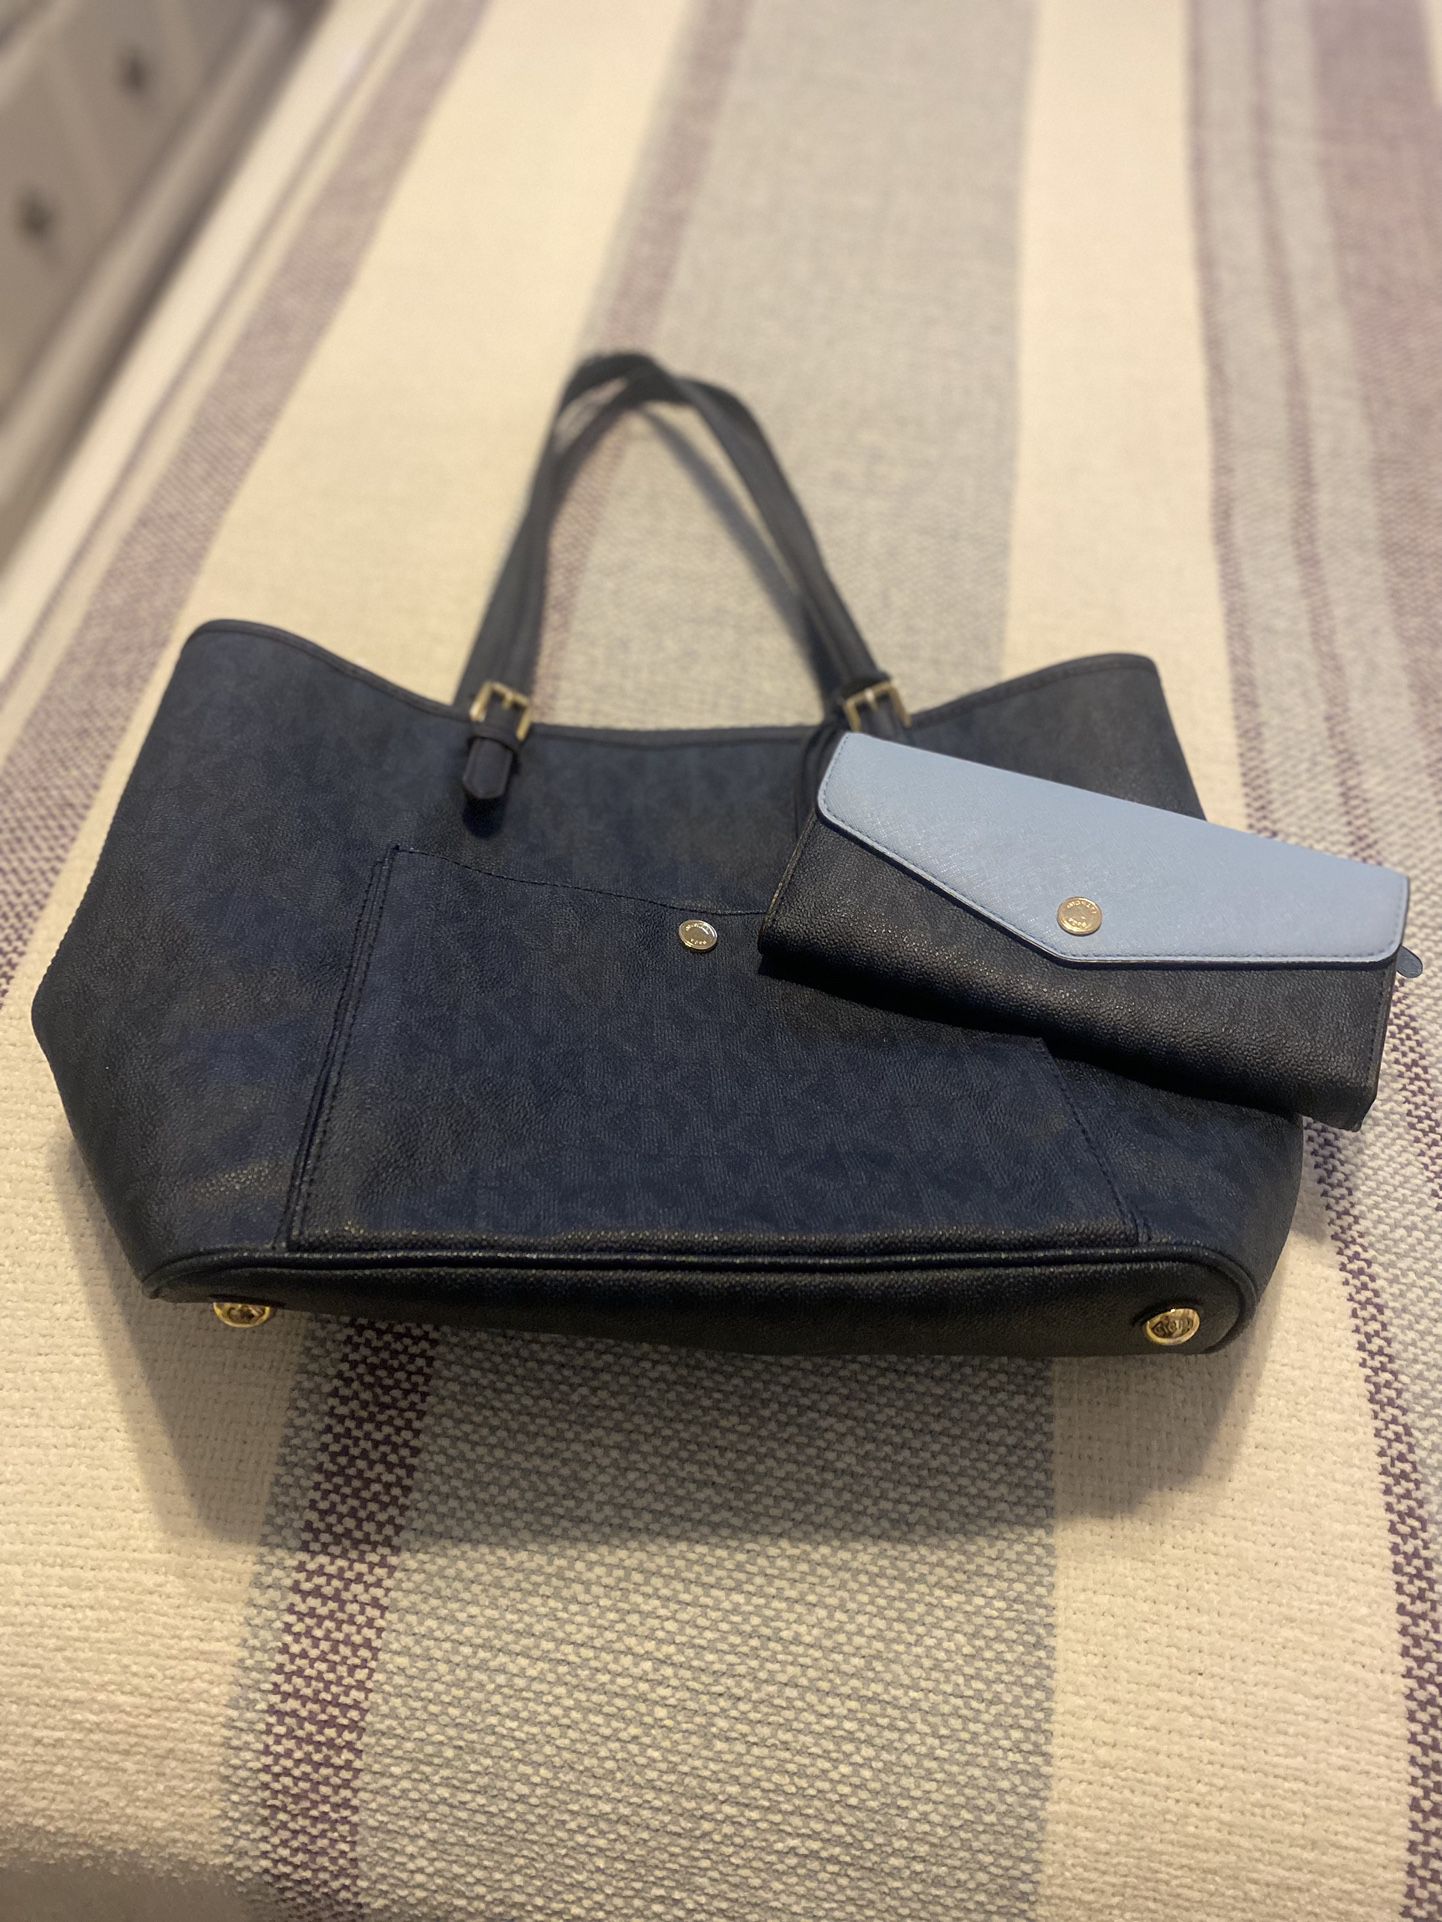 Michael Kors Handbag And Matching Wallet 